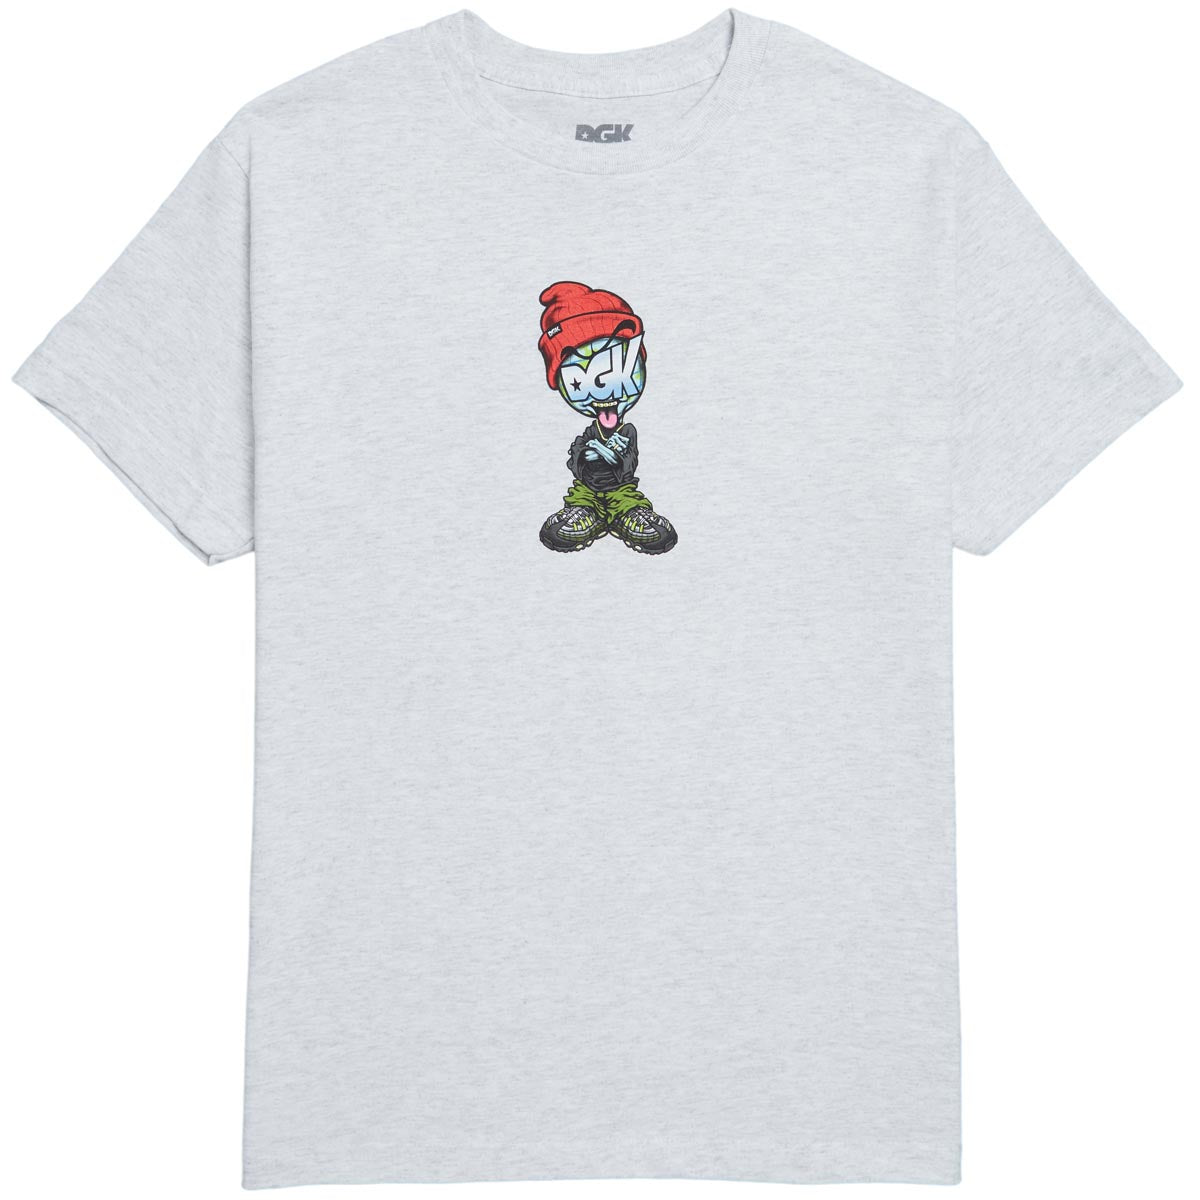 DGK Dope Boy T-Shirt - Ash image 1